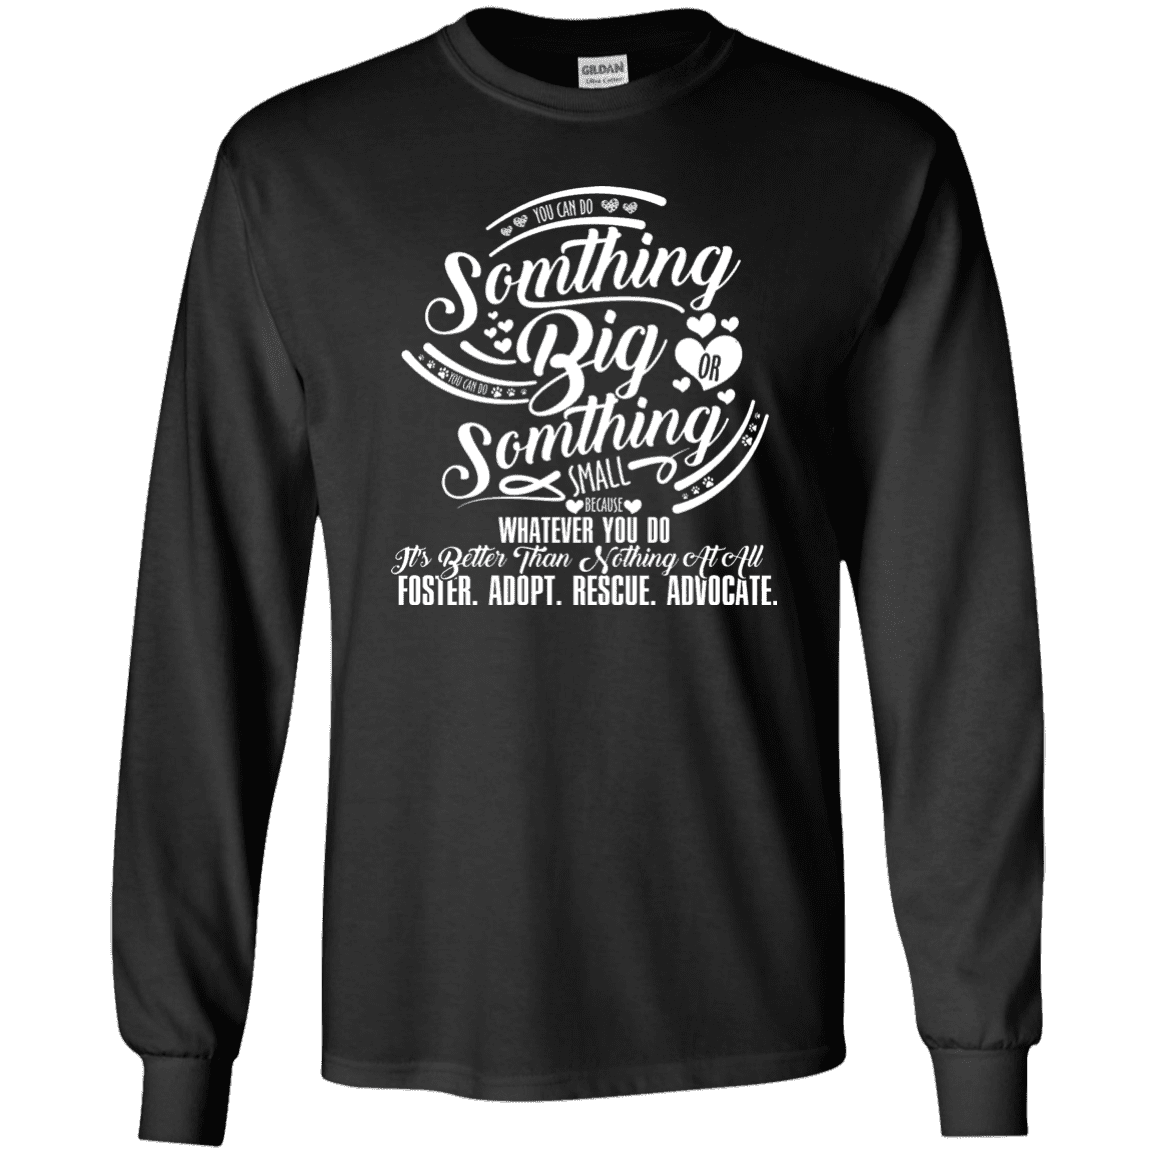 Do Something Big - Long Sleeve T Shirt.